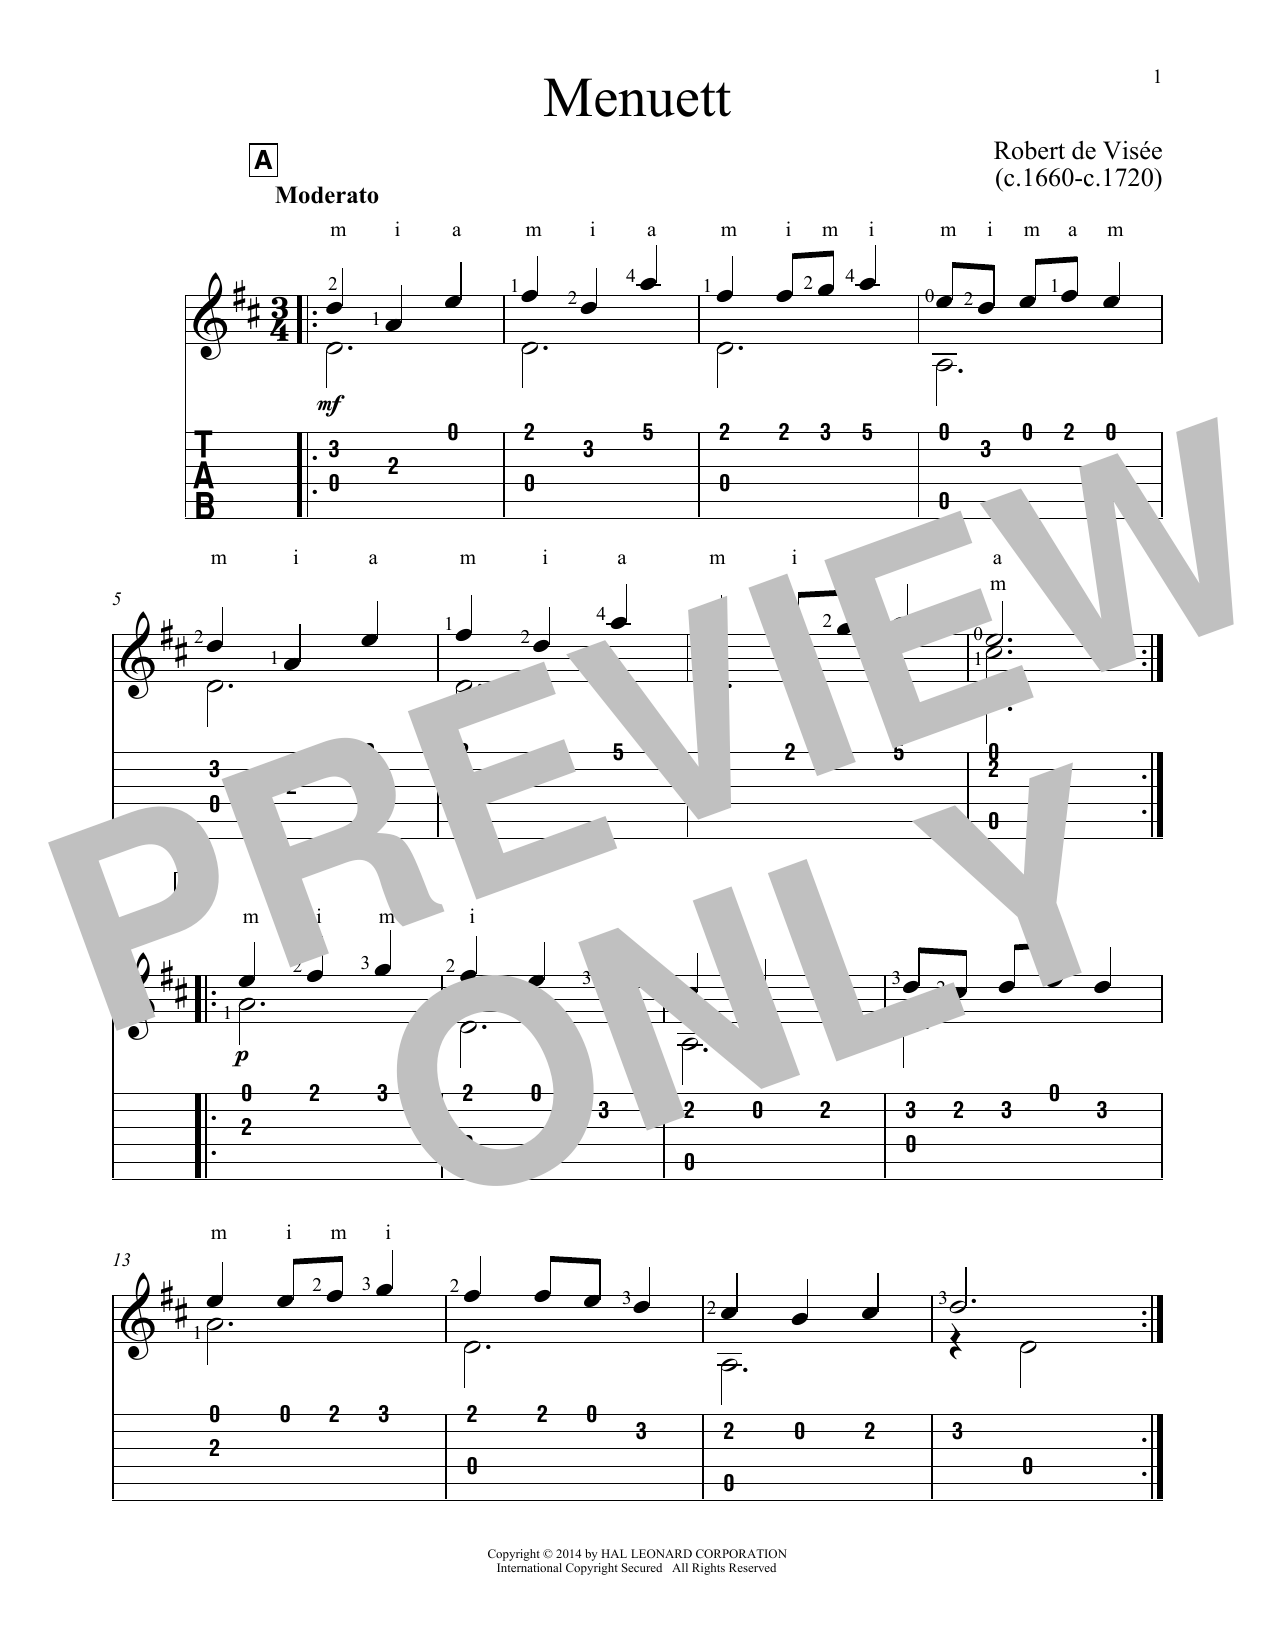 John Hill Menuett Sheet Music Notes & Chords for Guitar Tab - Download or Print PDF